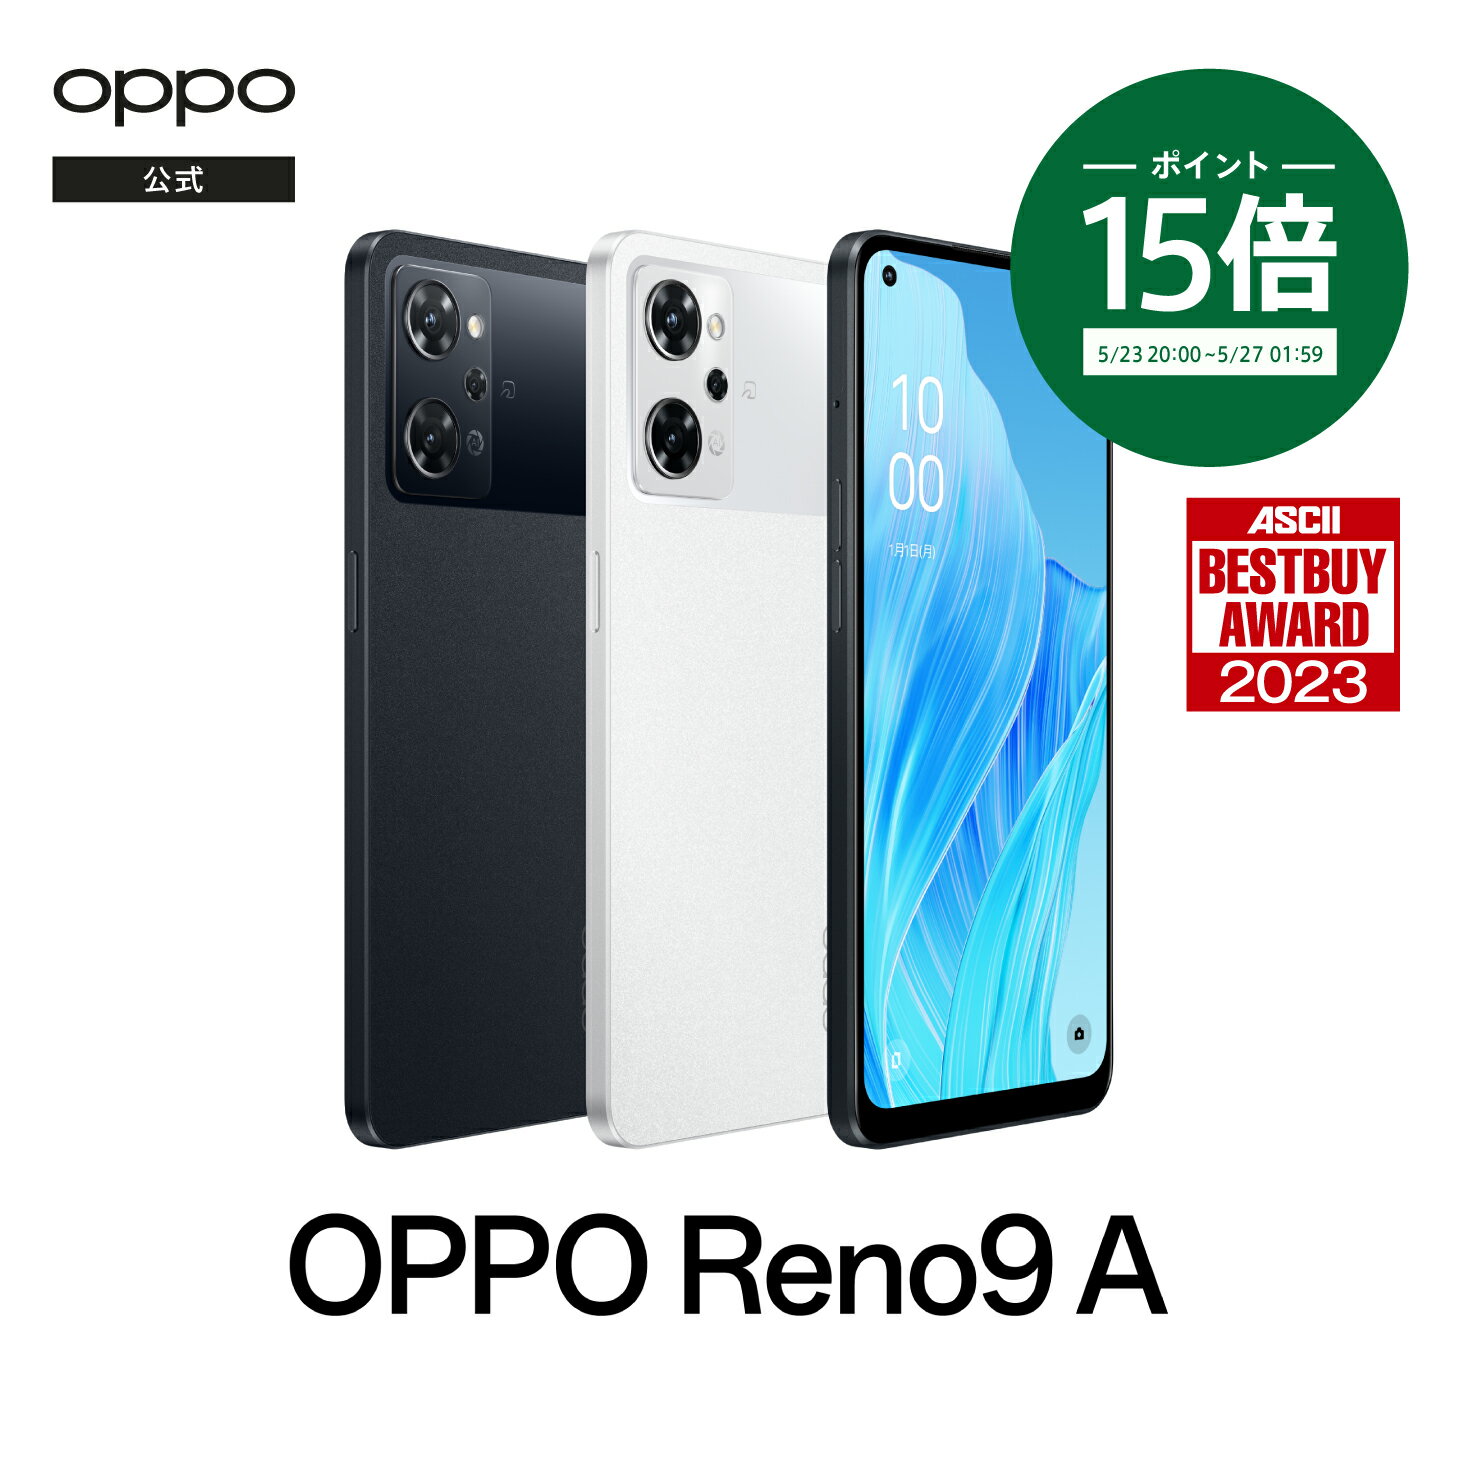 OPPO Reno9 A SIMフリー Android simfree 5G スマホ 本体 新品 アンドロイド スマートフォン シムフリー 端末 RAM 8GB 防水 防塵 急速充電 ディスプレイ指紋認証 おサイフケータイ 有機EL DSDV 顔認証 マイナンバーカード対応